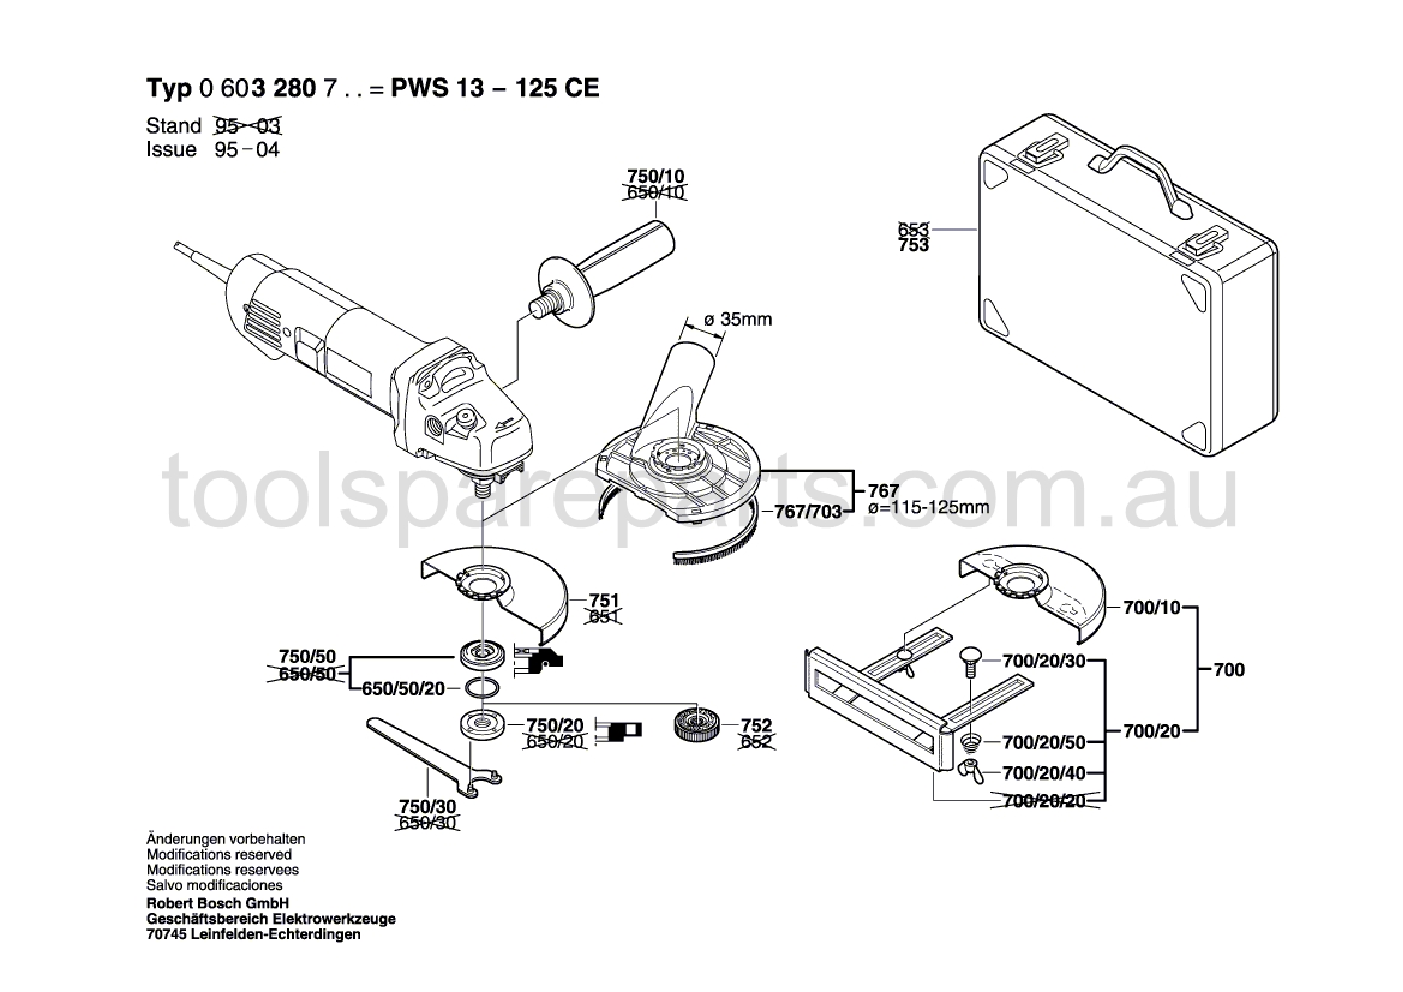 Bosch PWS 13-125 CE 0603280937  Diagram 2